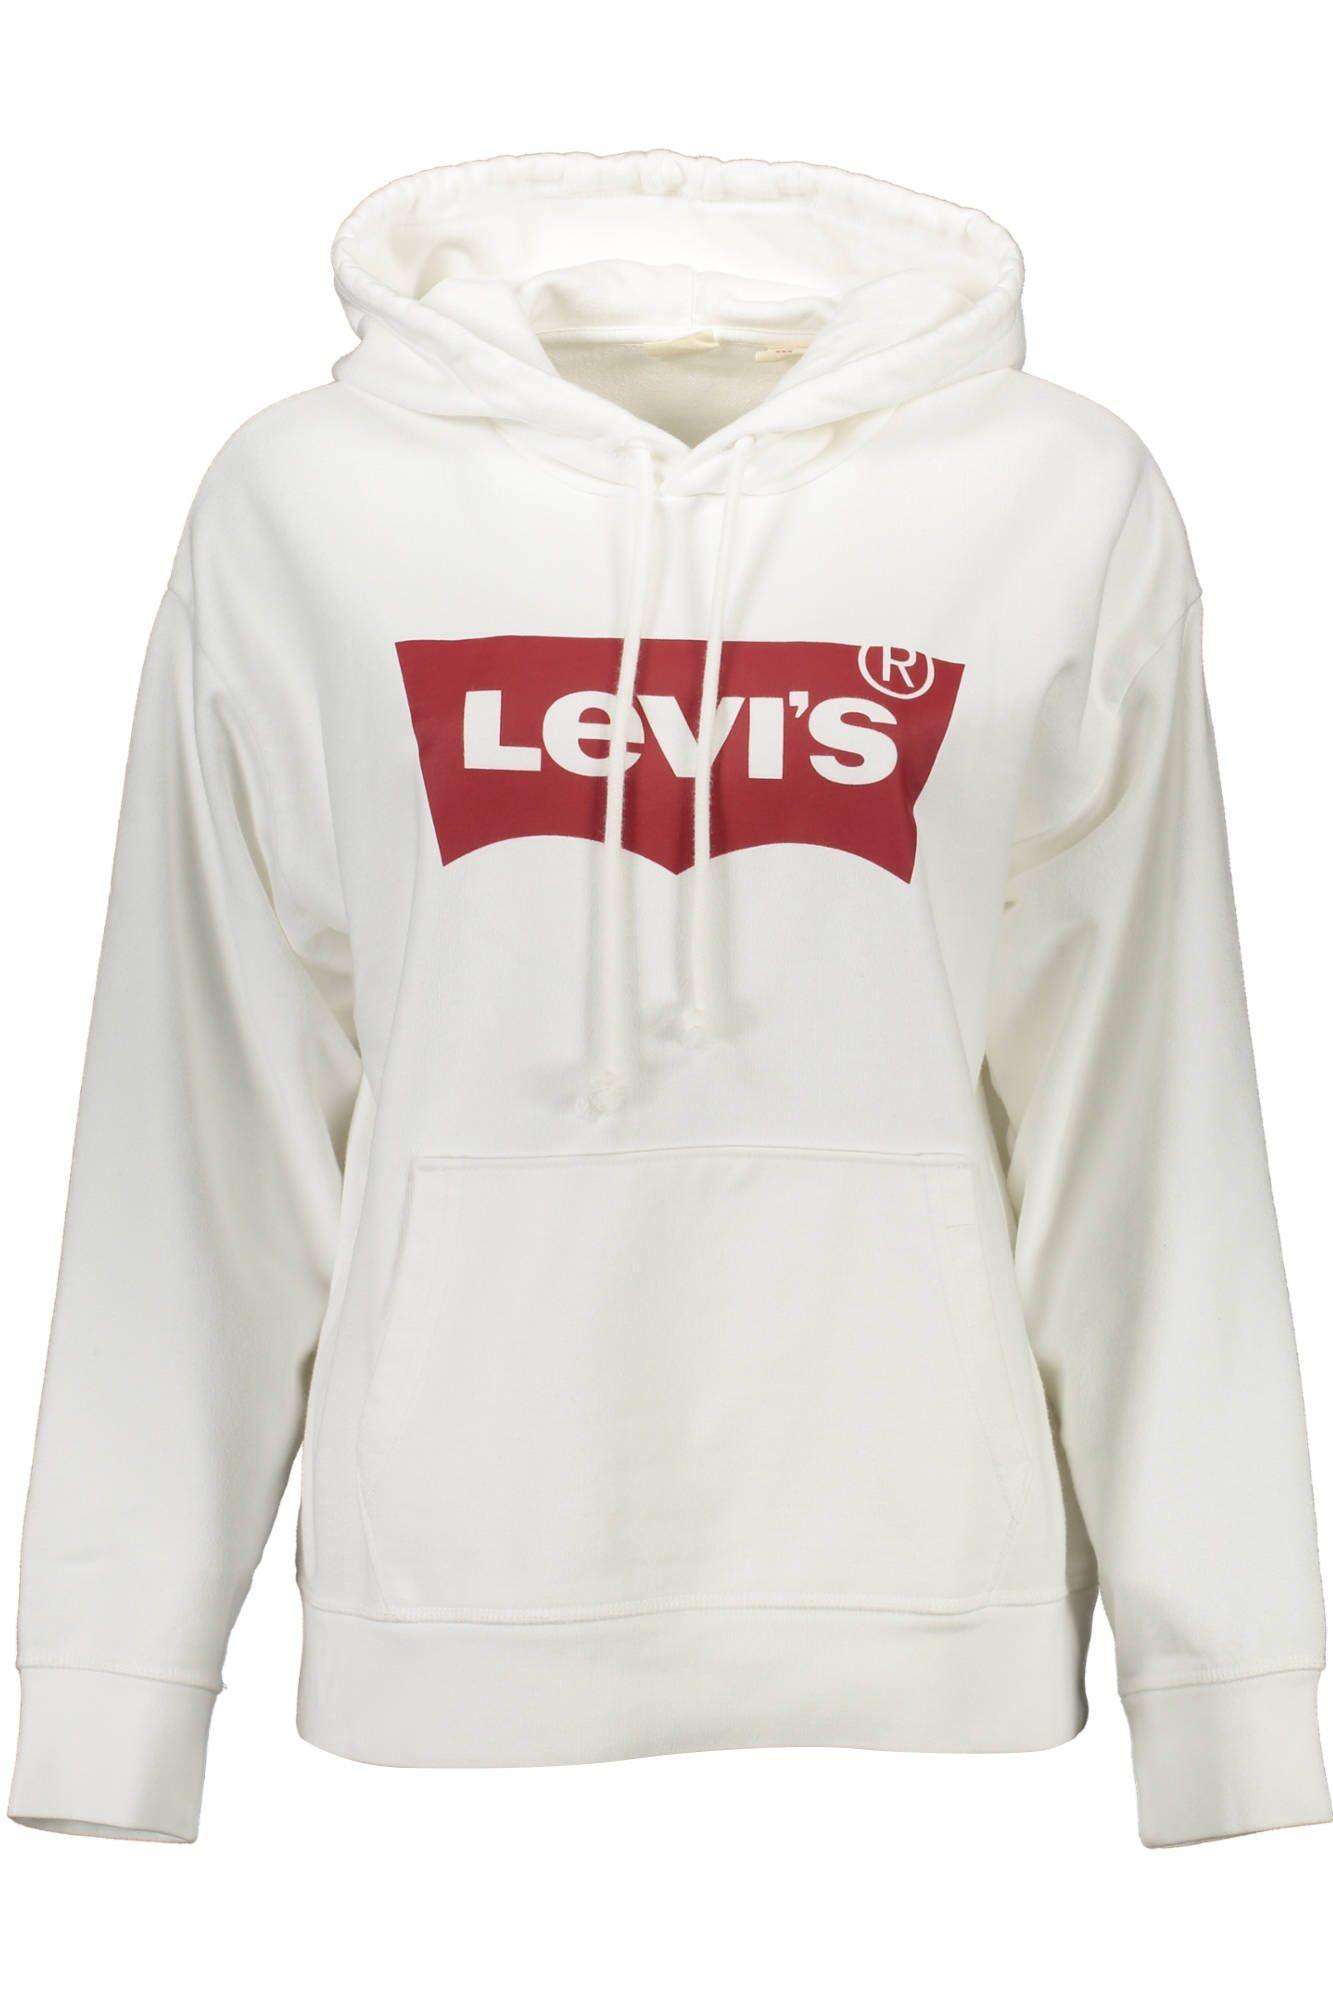 Levi's Chic White Cotton Hooded Sweatshirt With Logo - PER.FASHION